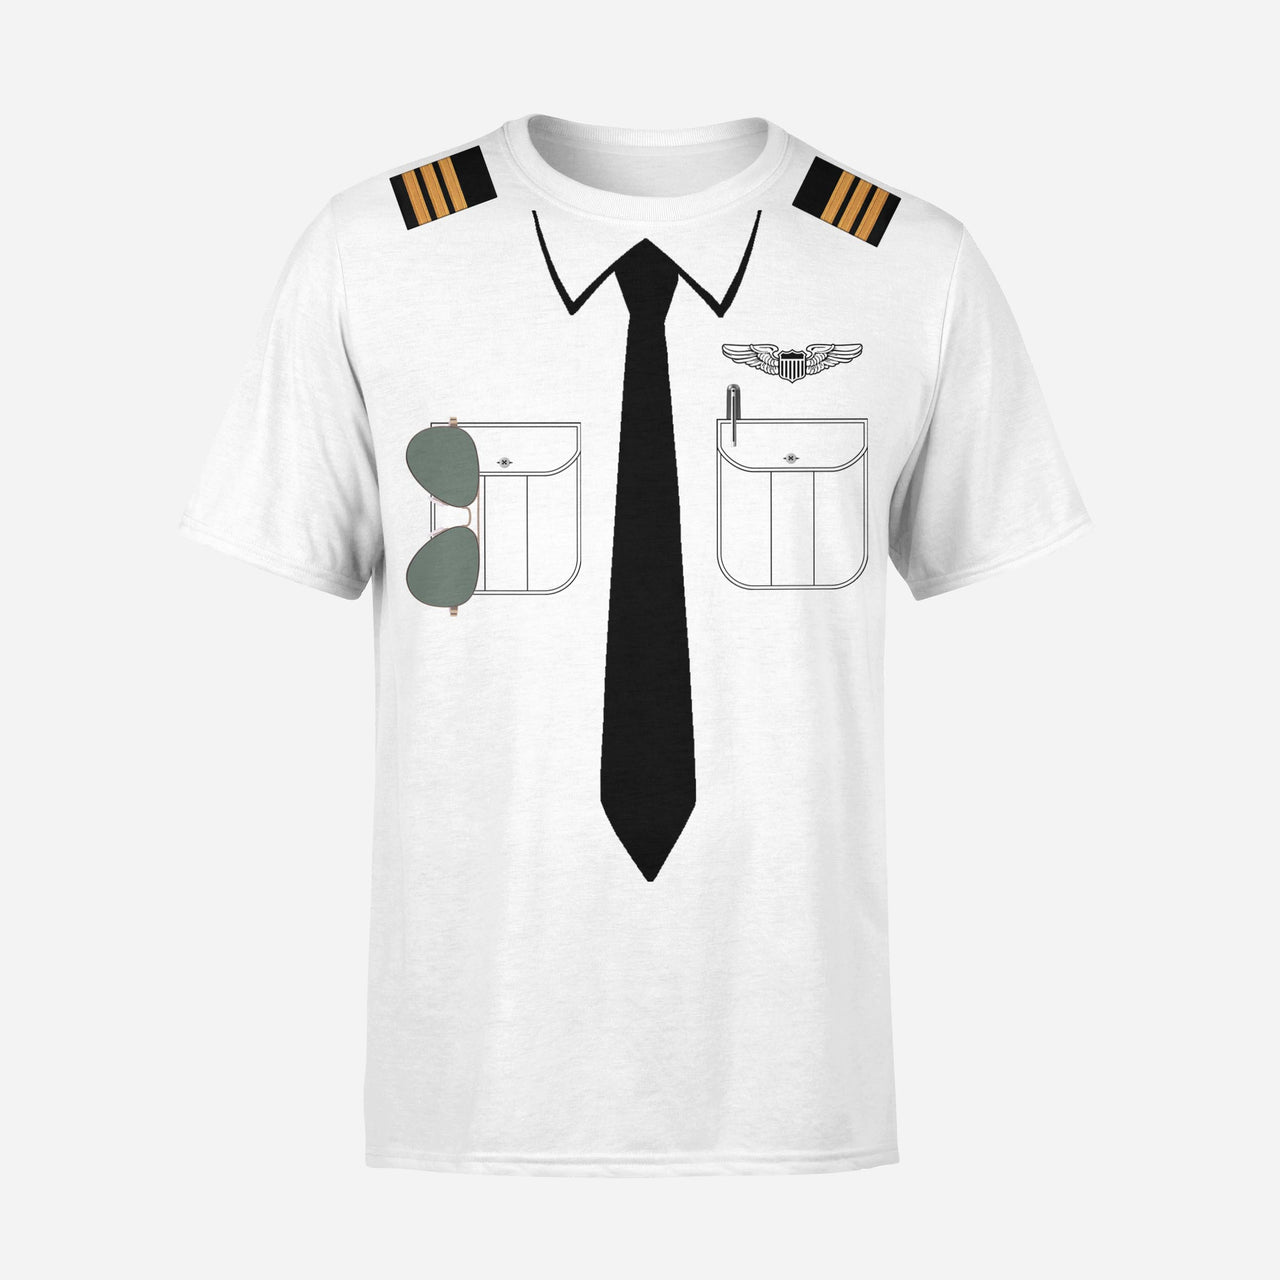 Customizable Pilot Uniform (Badge 1) Designed T-Shirts